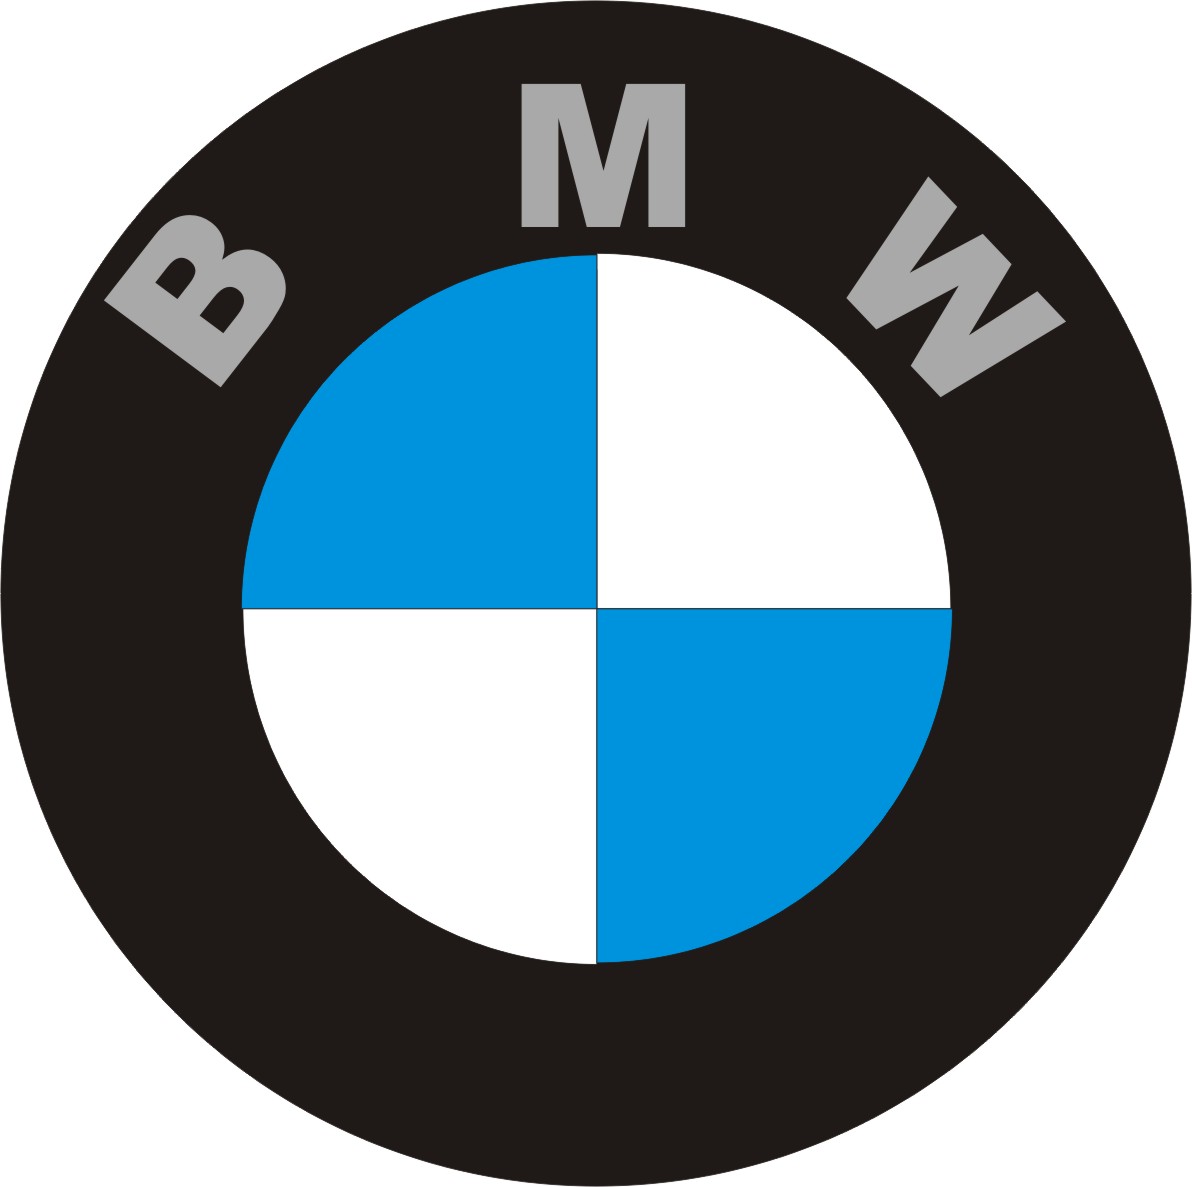 Bmw logo meaning